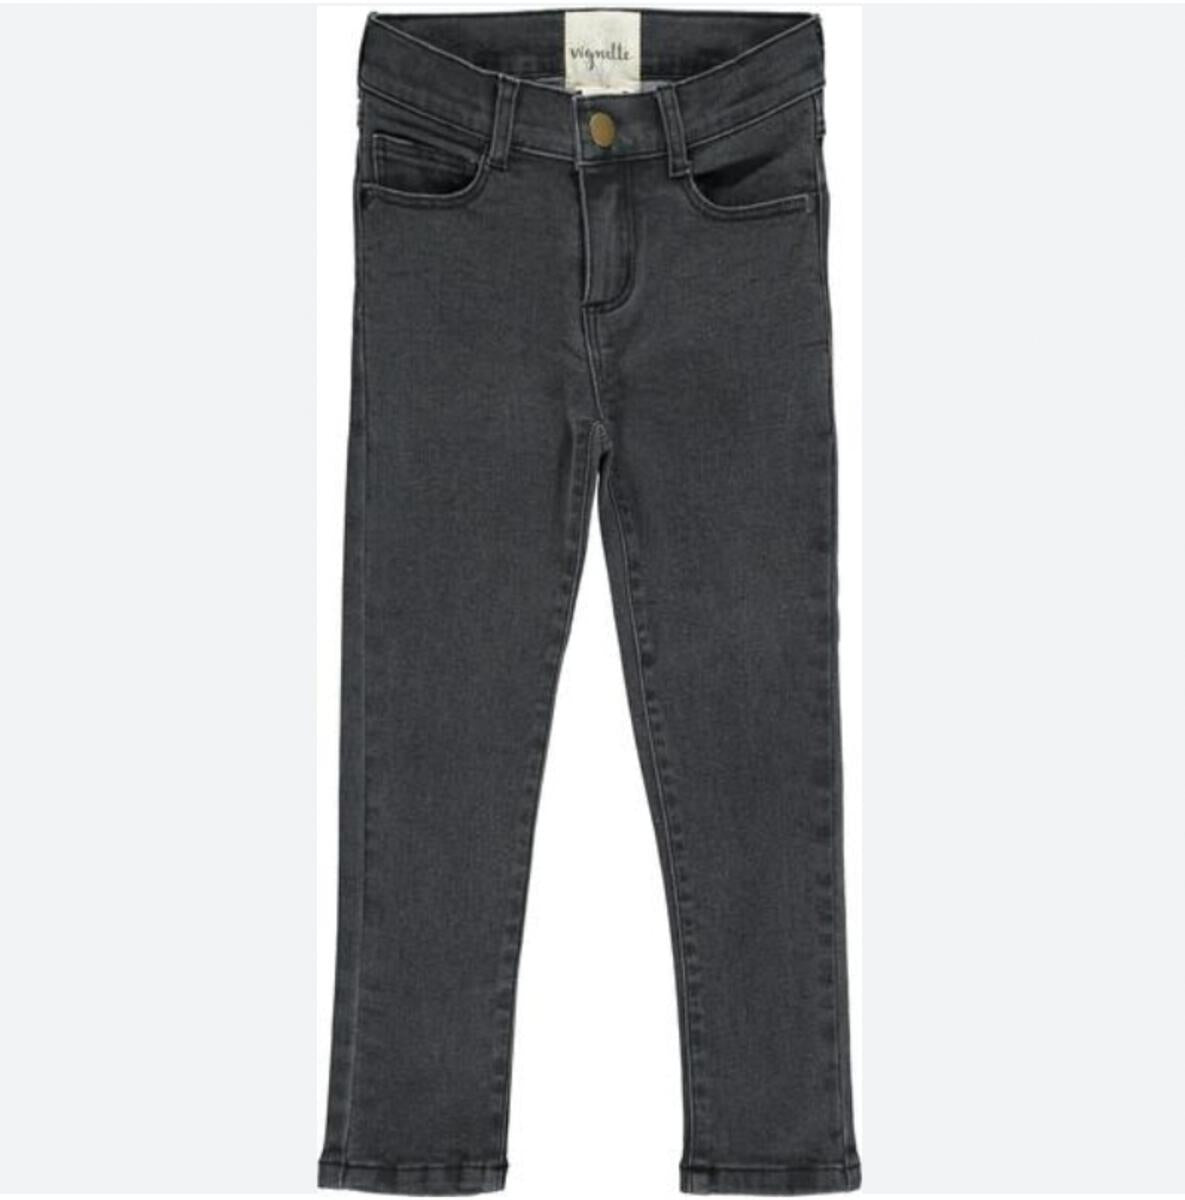 covelRachel Denim Jeans - Grey Wash - Premium jeans from Vignette - Just $28! Shop now at covelgirls, kid bottom, Kids, Toddlercovel